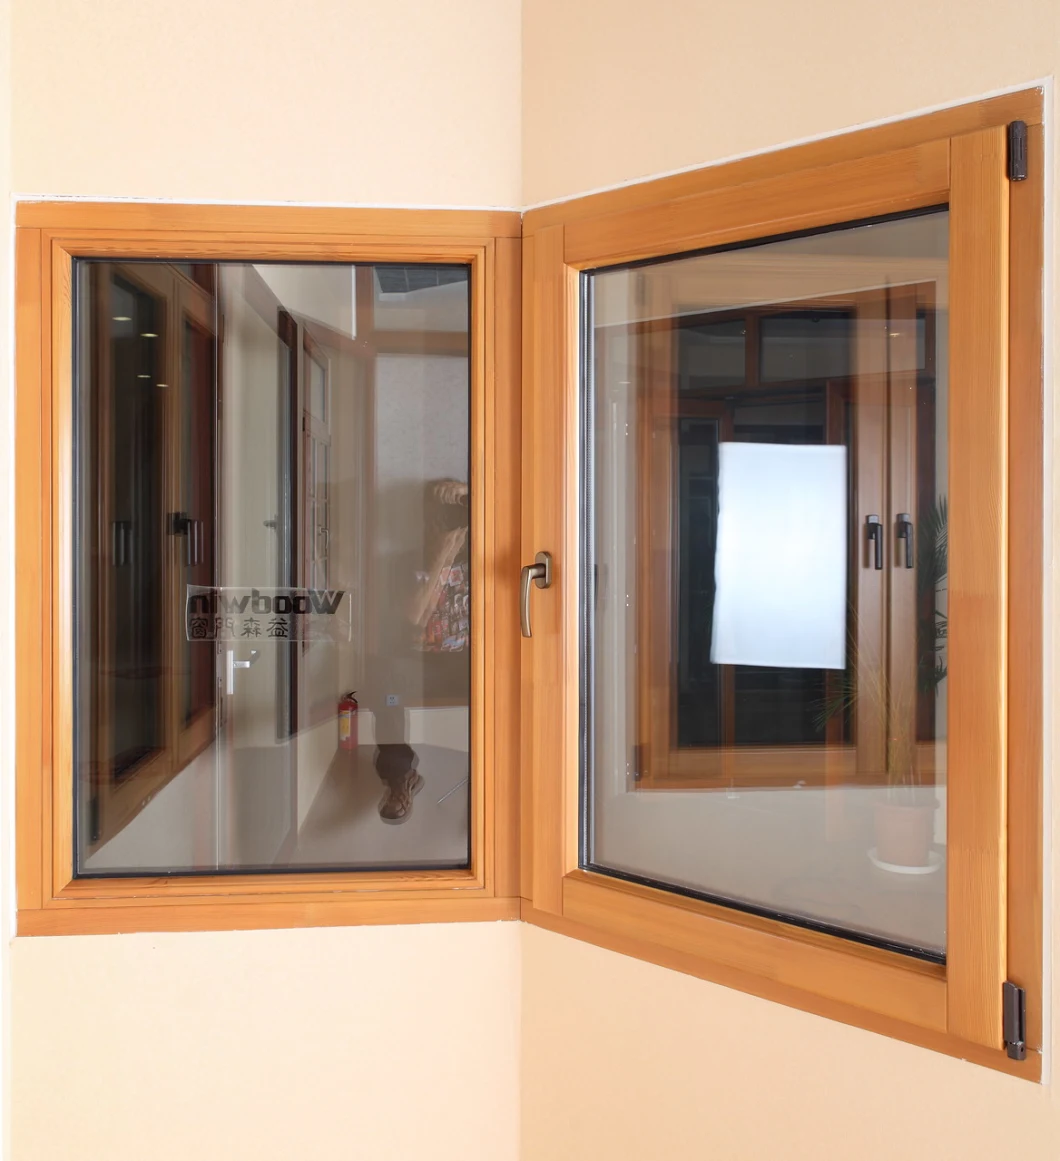 Aluminium Clab Wood Window|Wood Replacement Windows